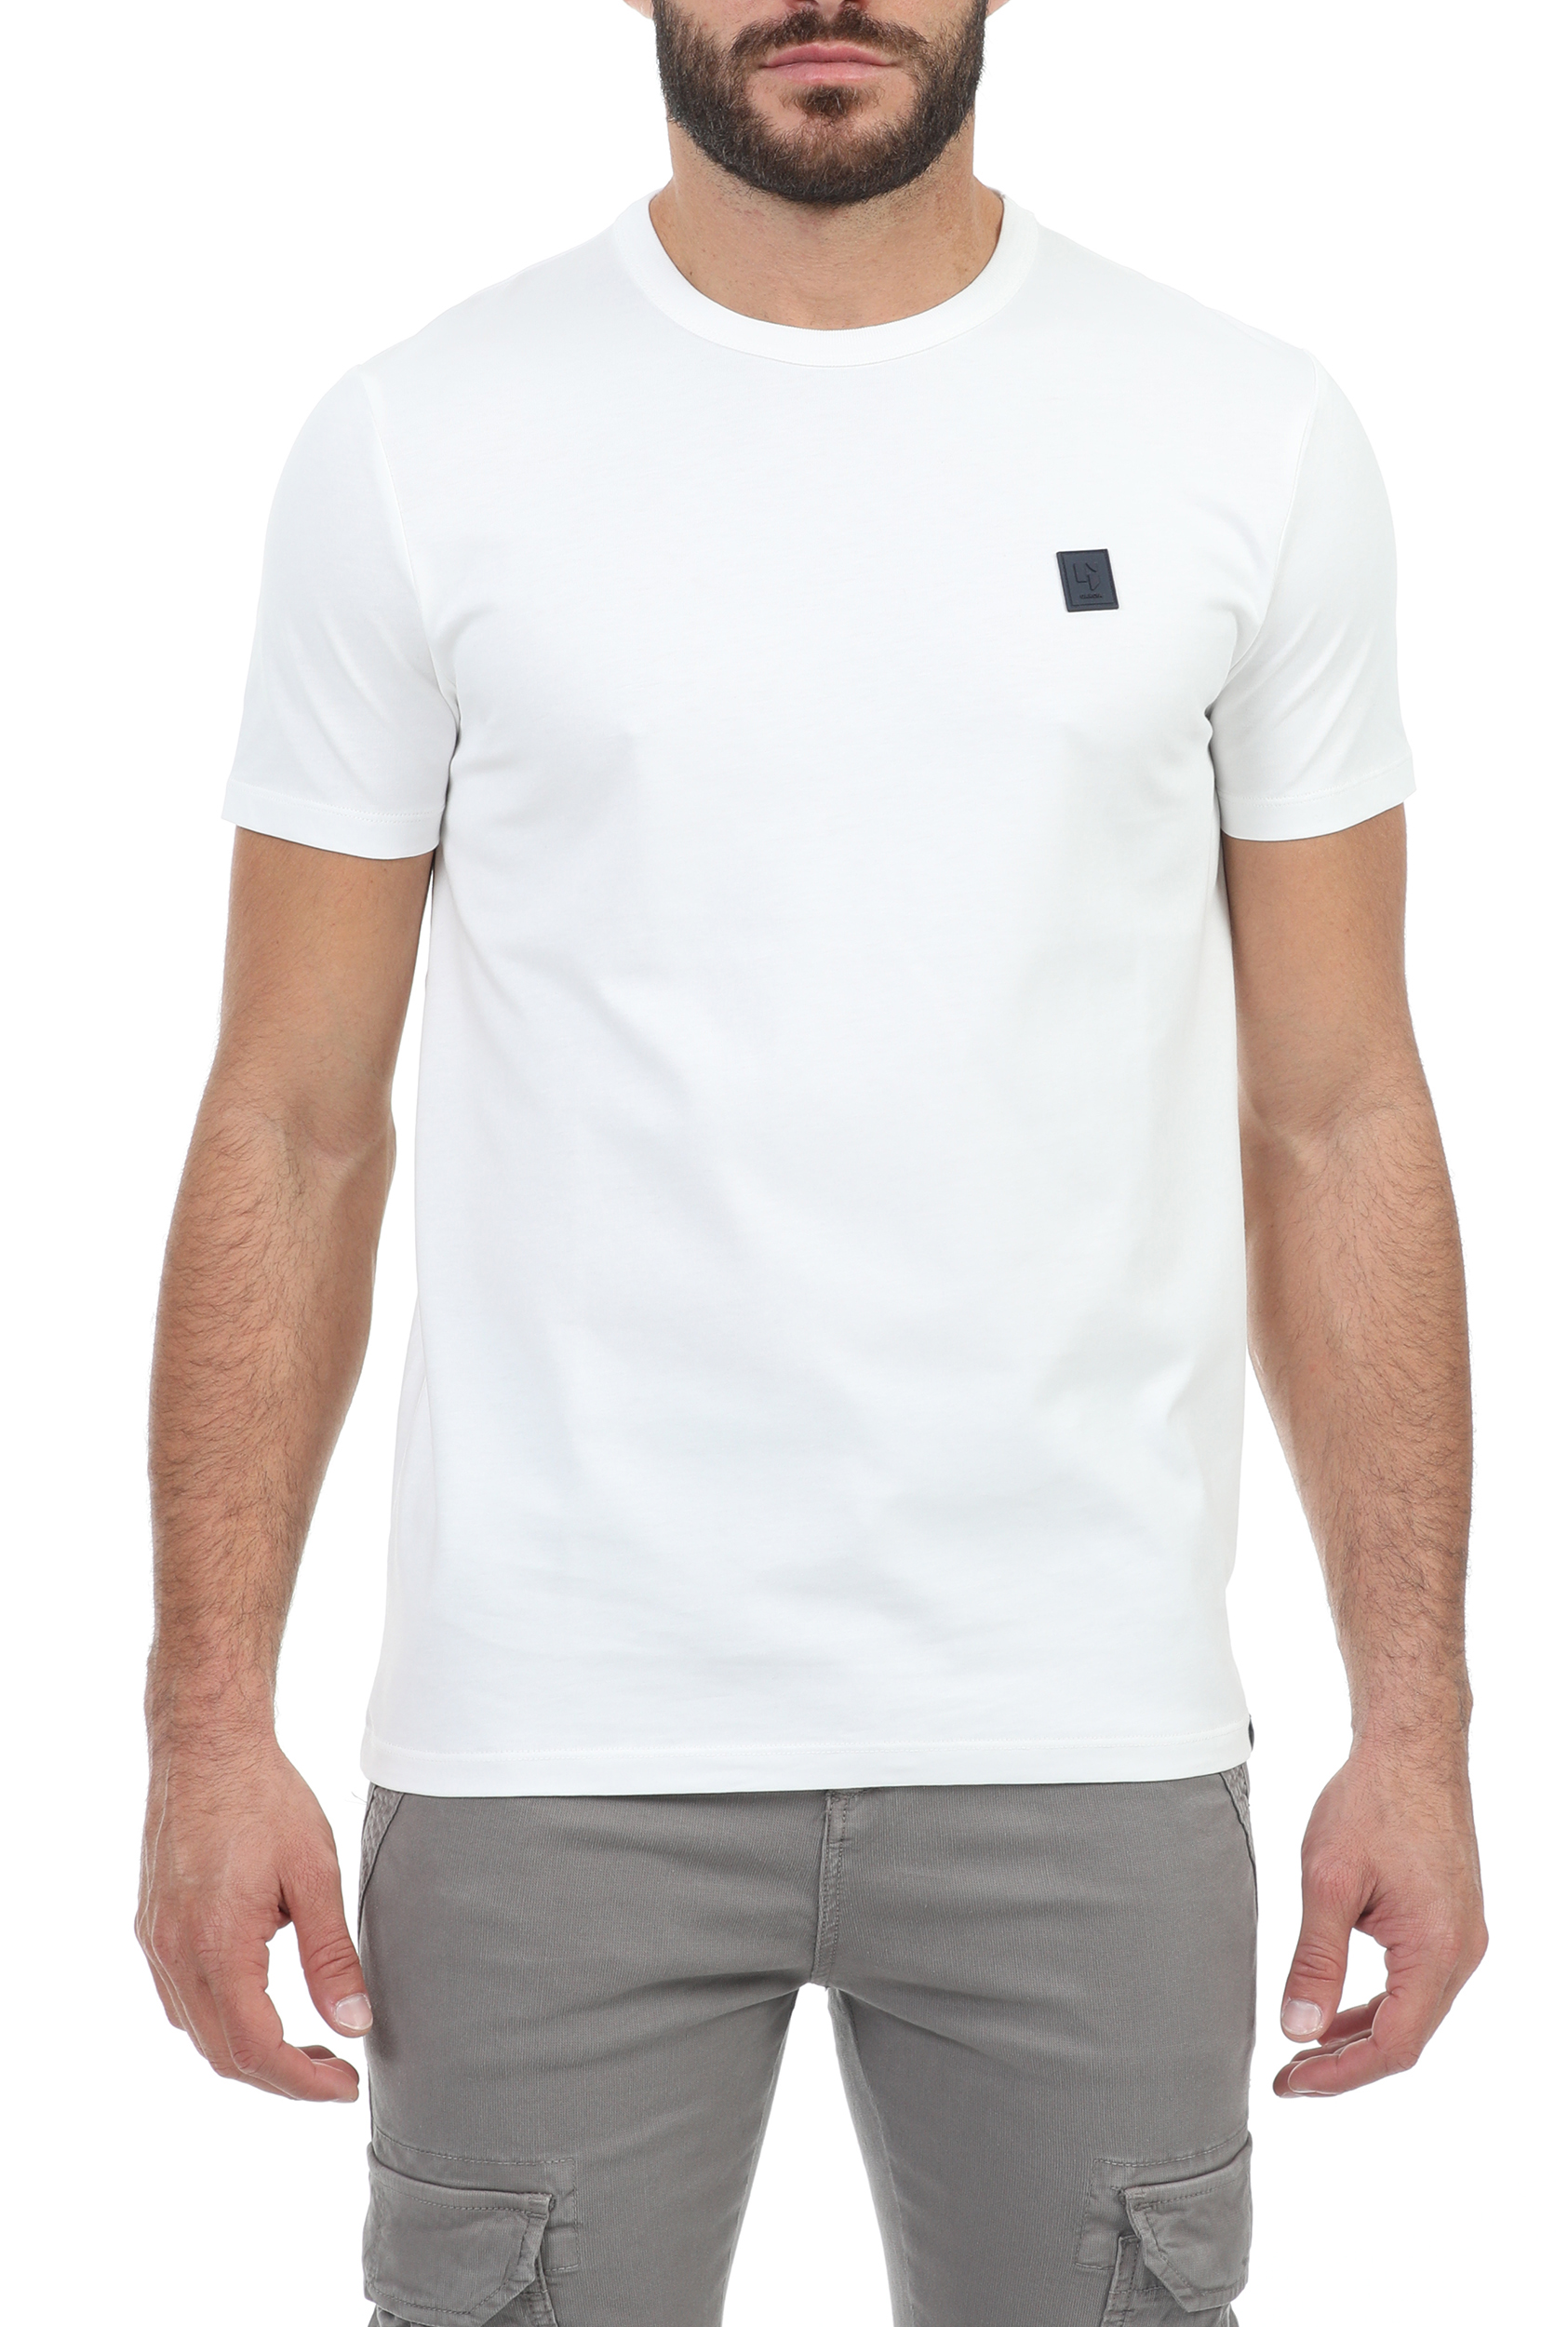 GARCIA JEANS – Ανδρικο t-shirt GARCIA JEANS λευκο